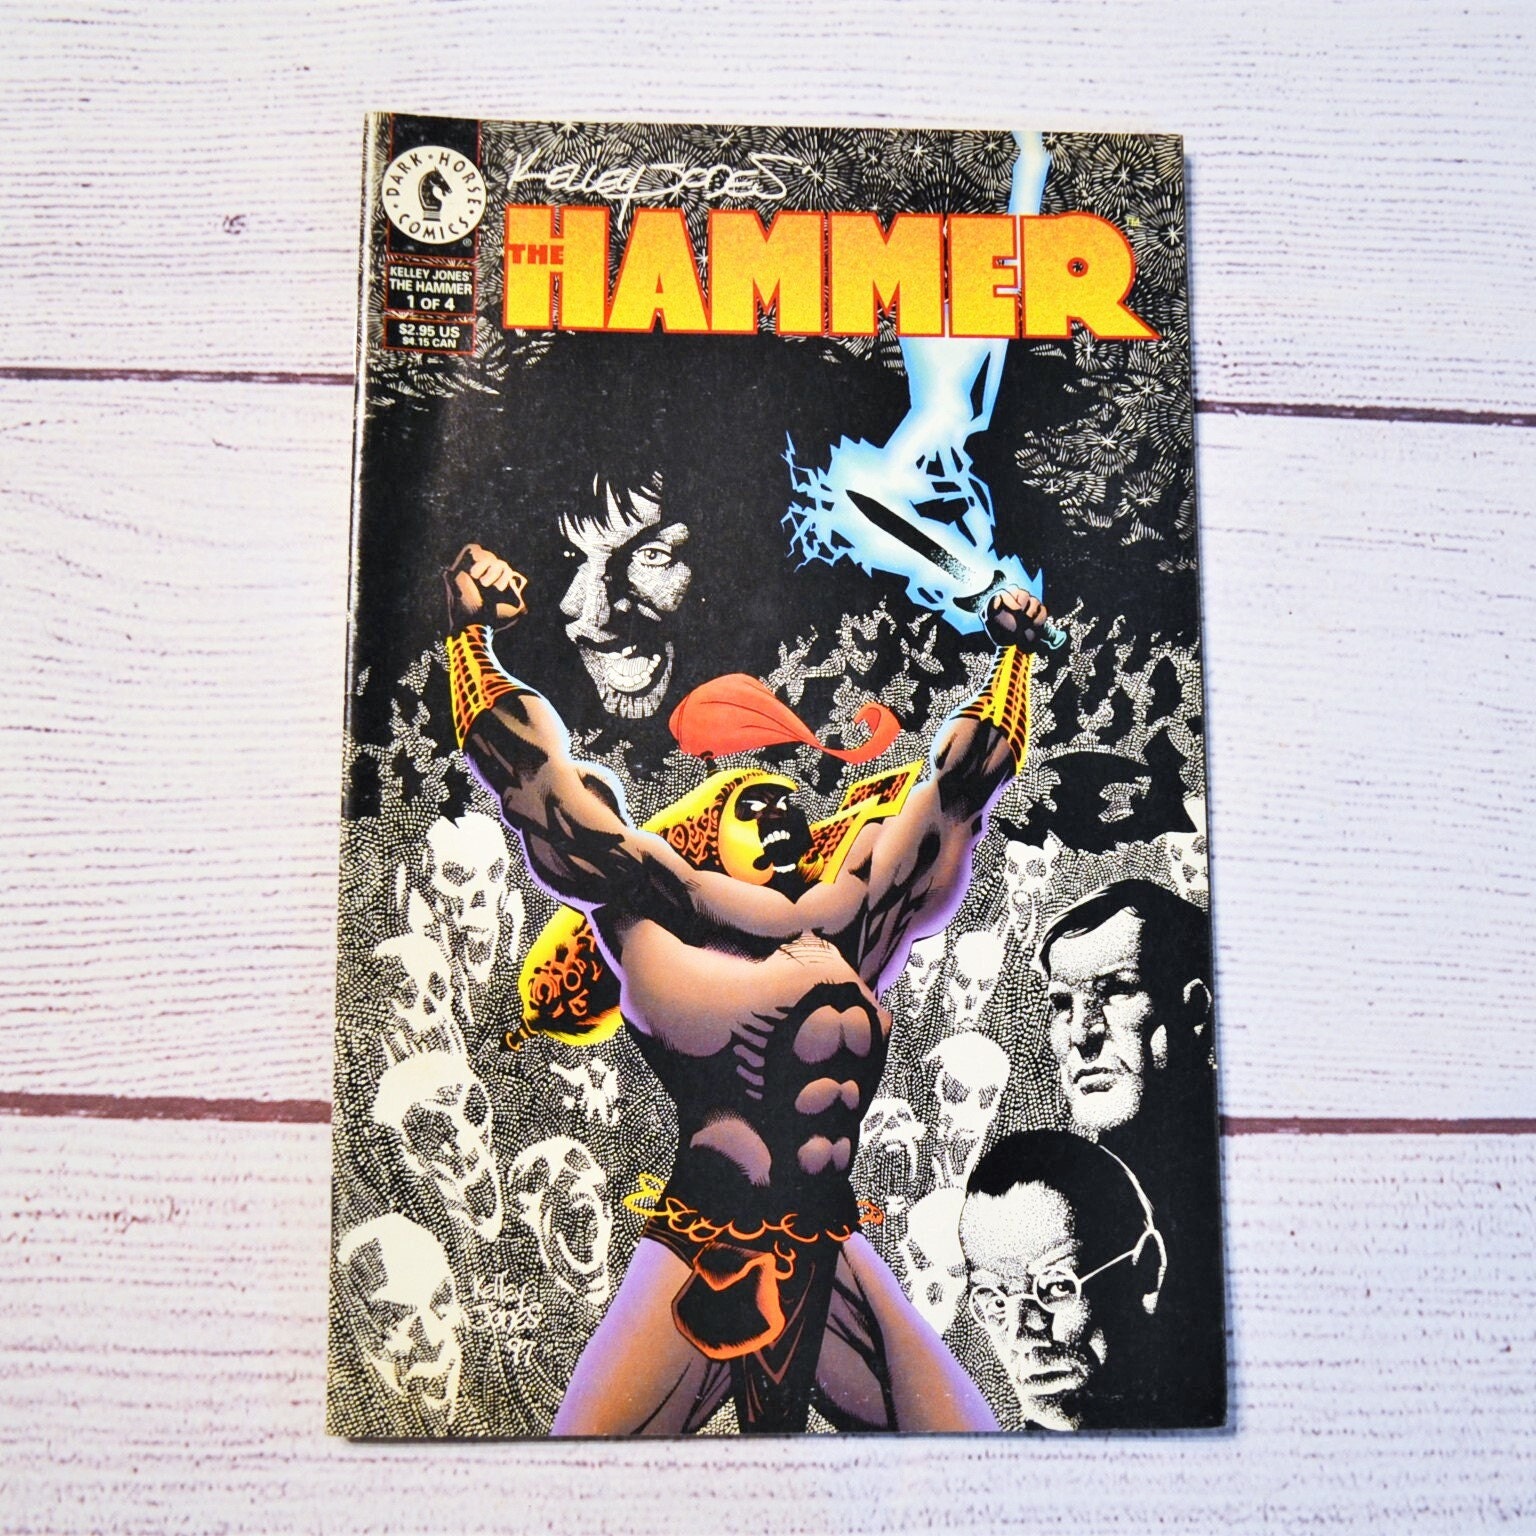 The hammer comic